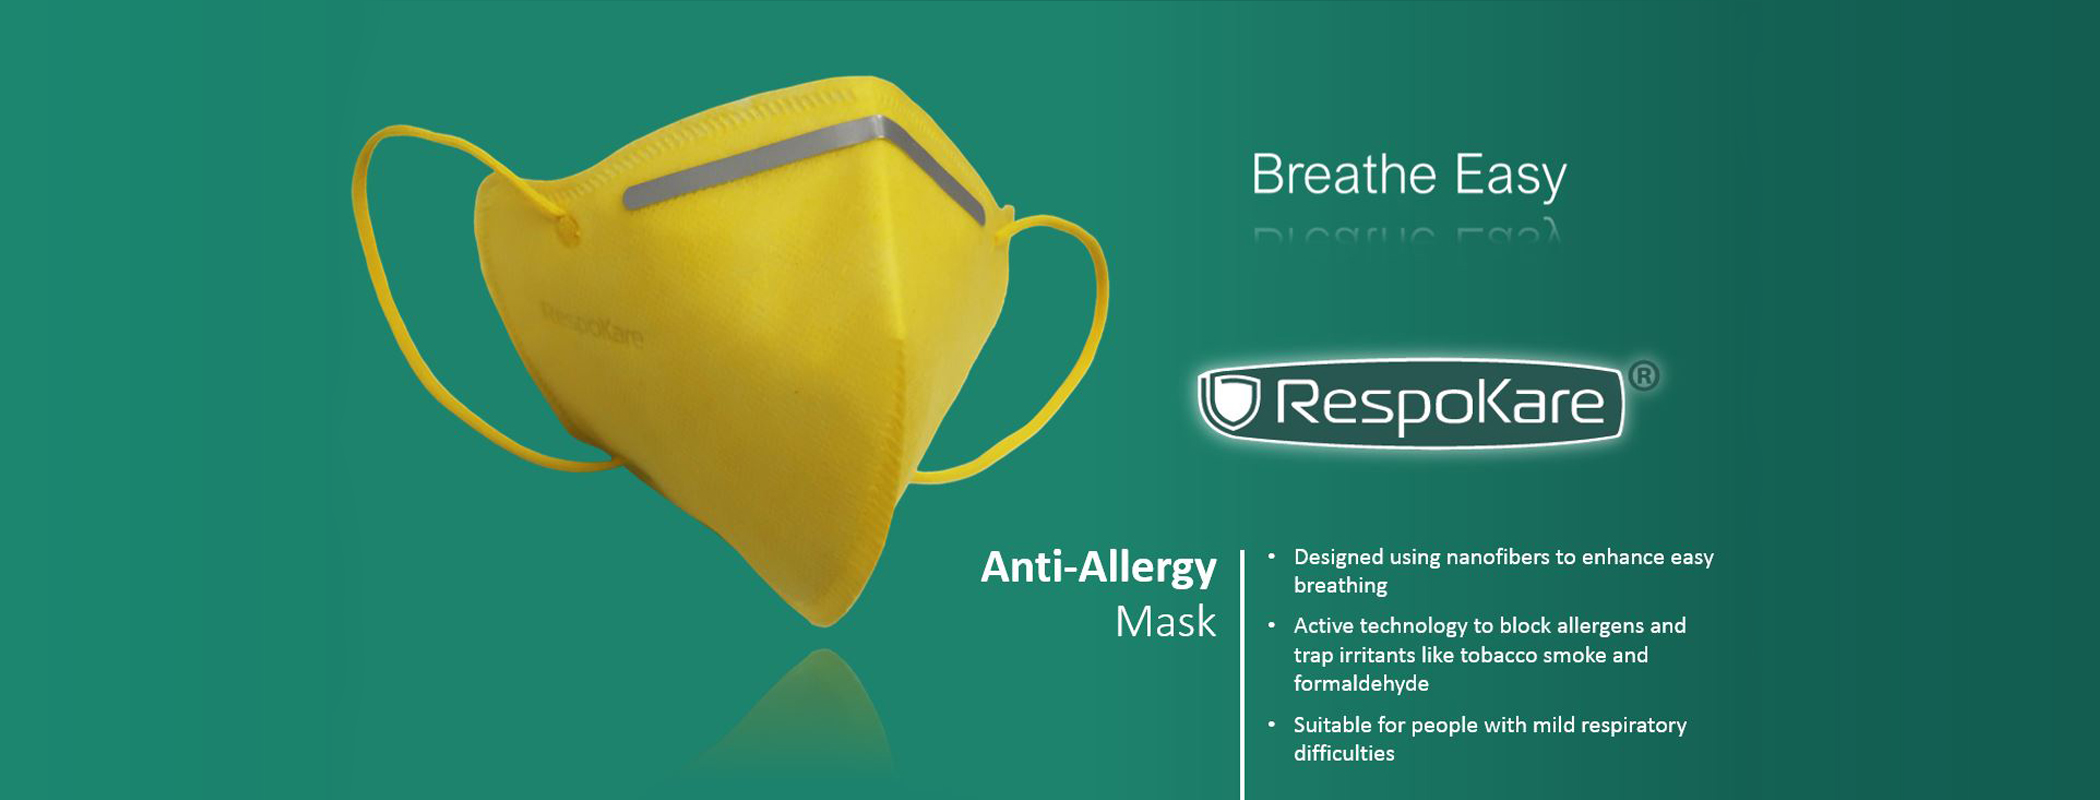 Respokare Anti-Allergy Mask